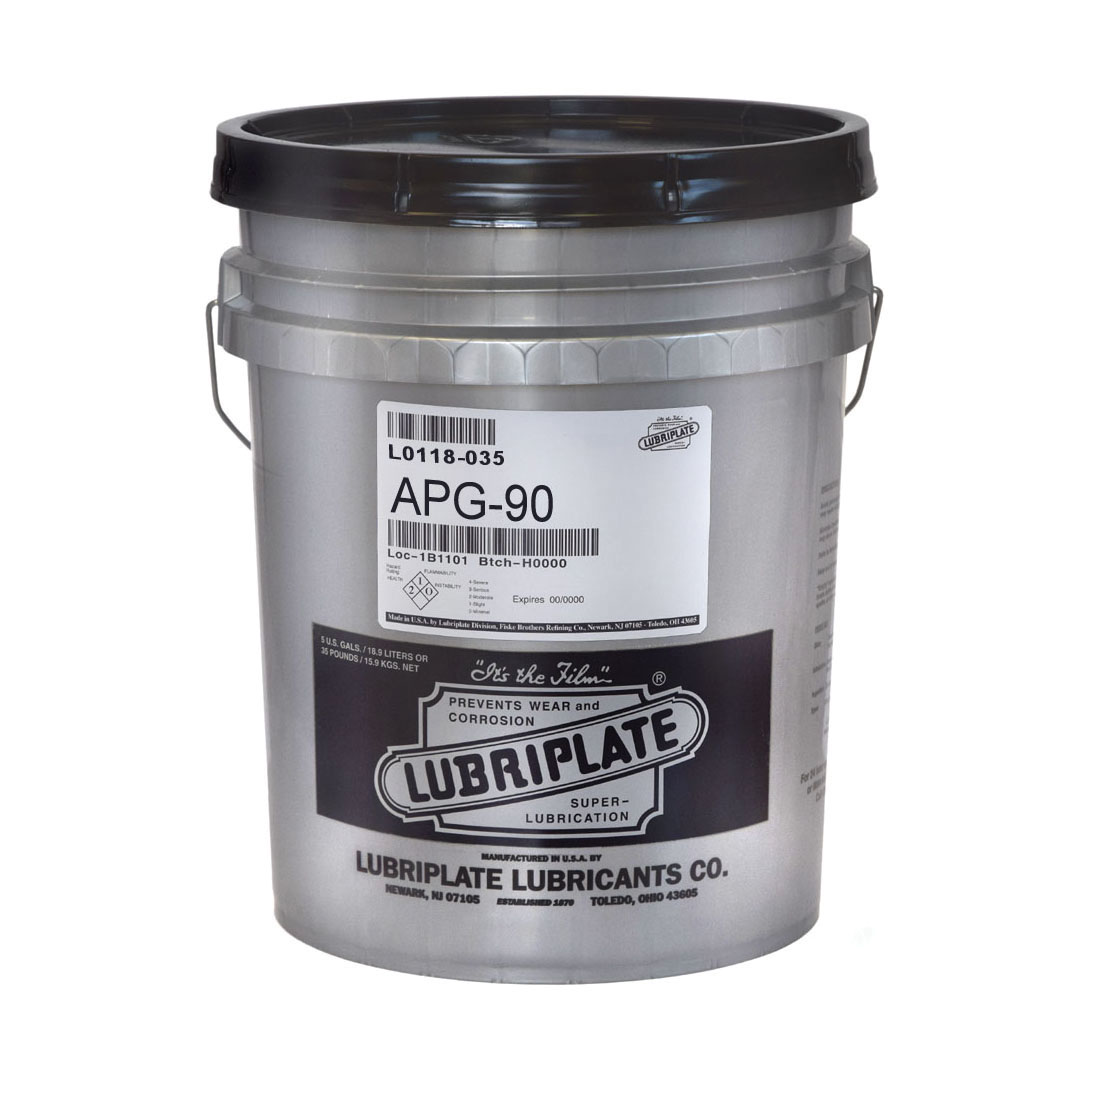 Lubriplate® L0118-035 APG-90 Petroleum Based Gear Oil, 35 lb Pail, Additive Odor/Scent, Liquid Form, ISO 150/220/SAE 85W-90 Grade, Amber